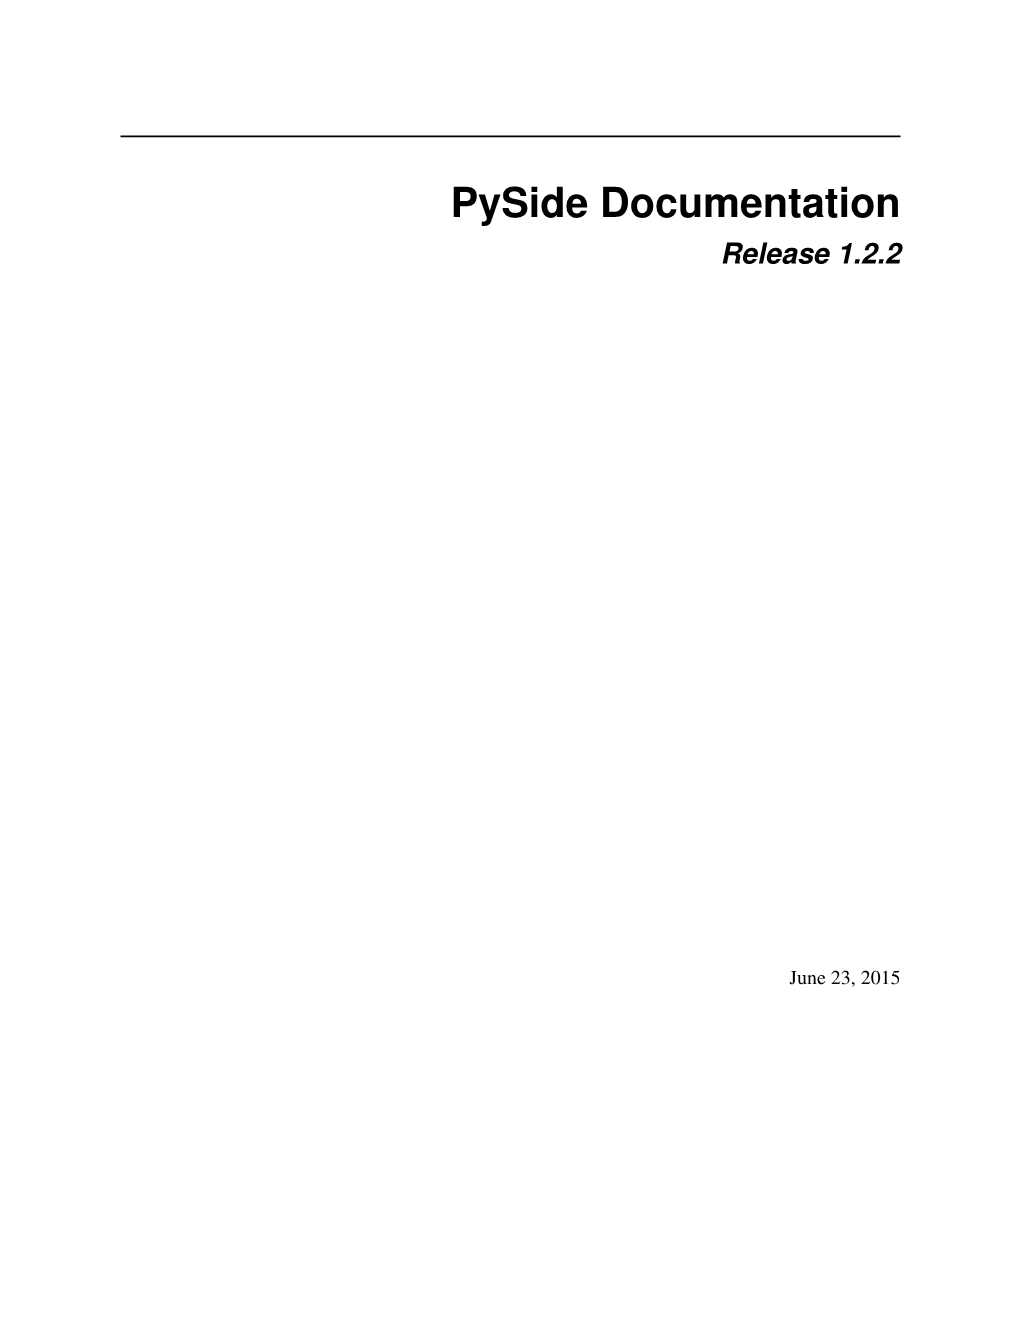 Pyside Documentation Release 1.2.2